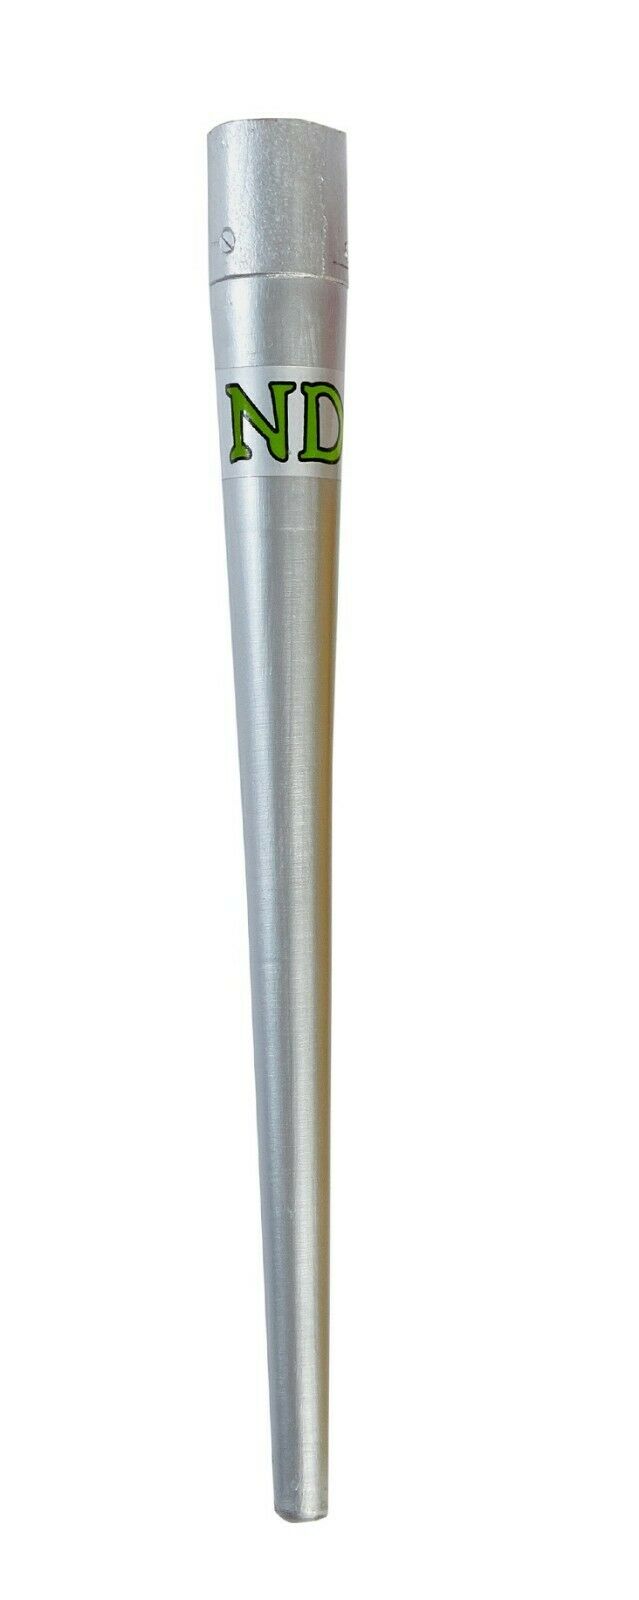 ND Cricket Bat Handle Cone Wooden Grip Applicator Top Seller